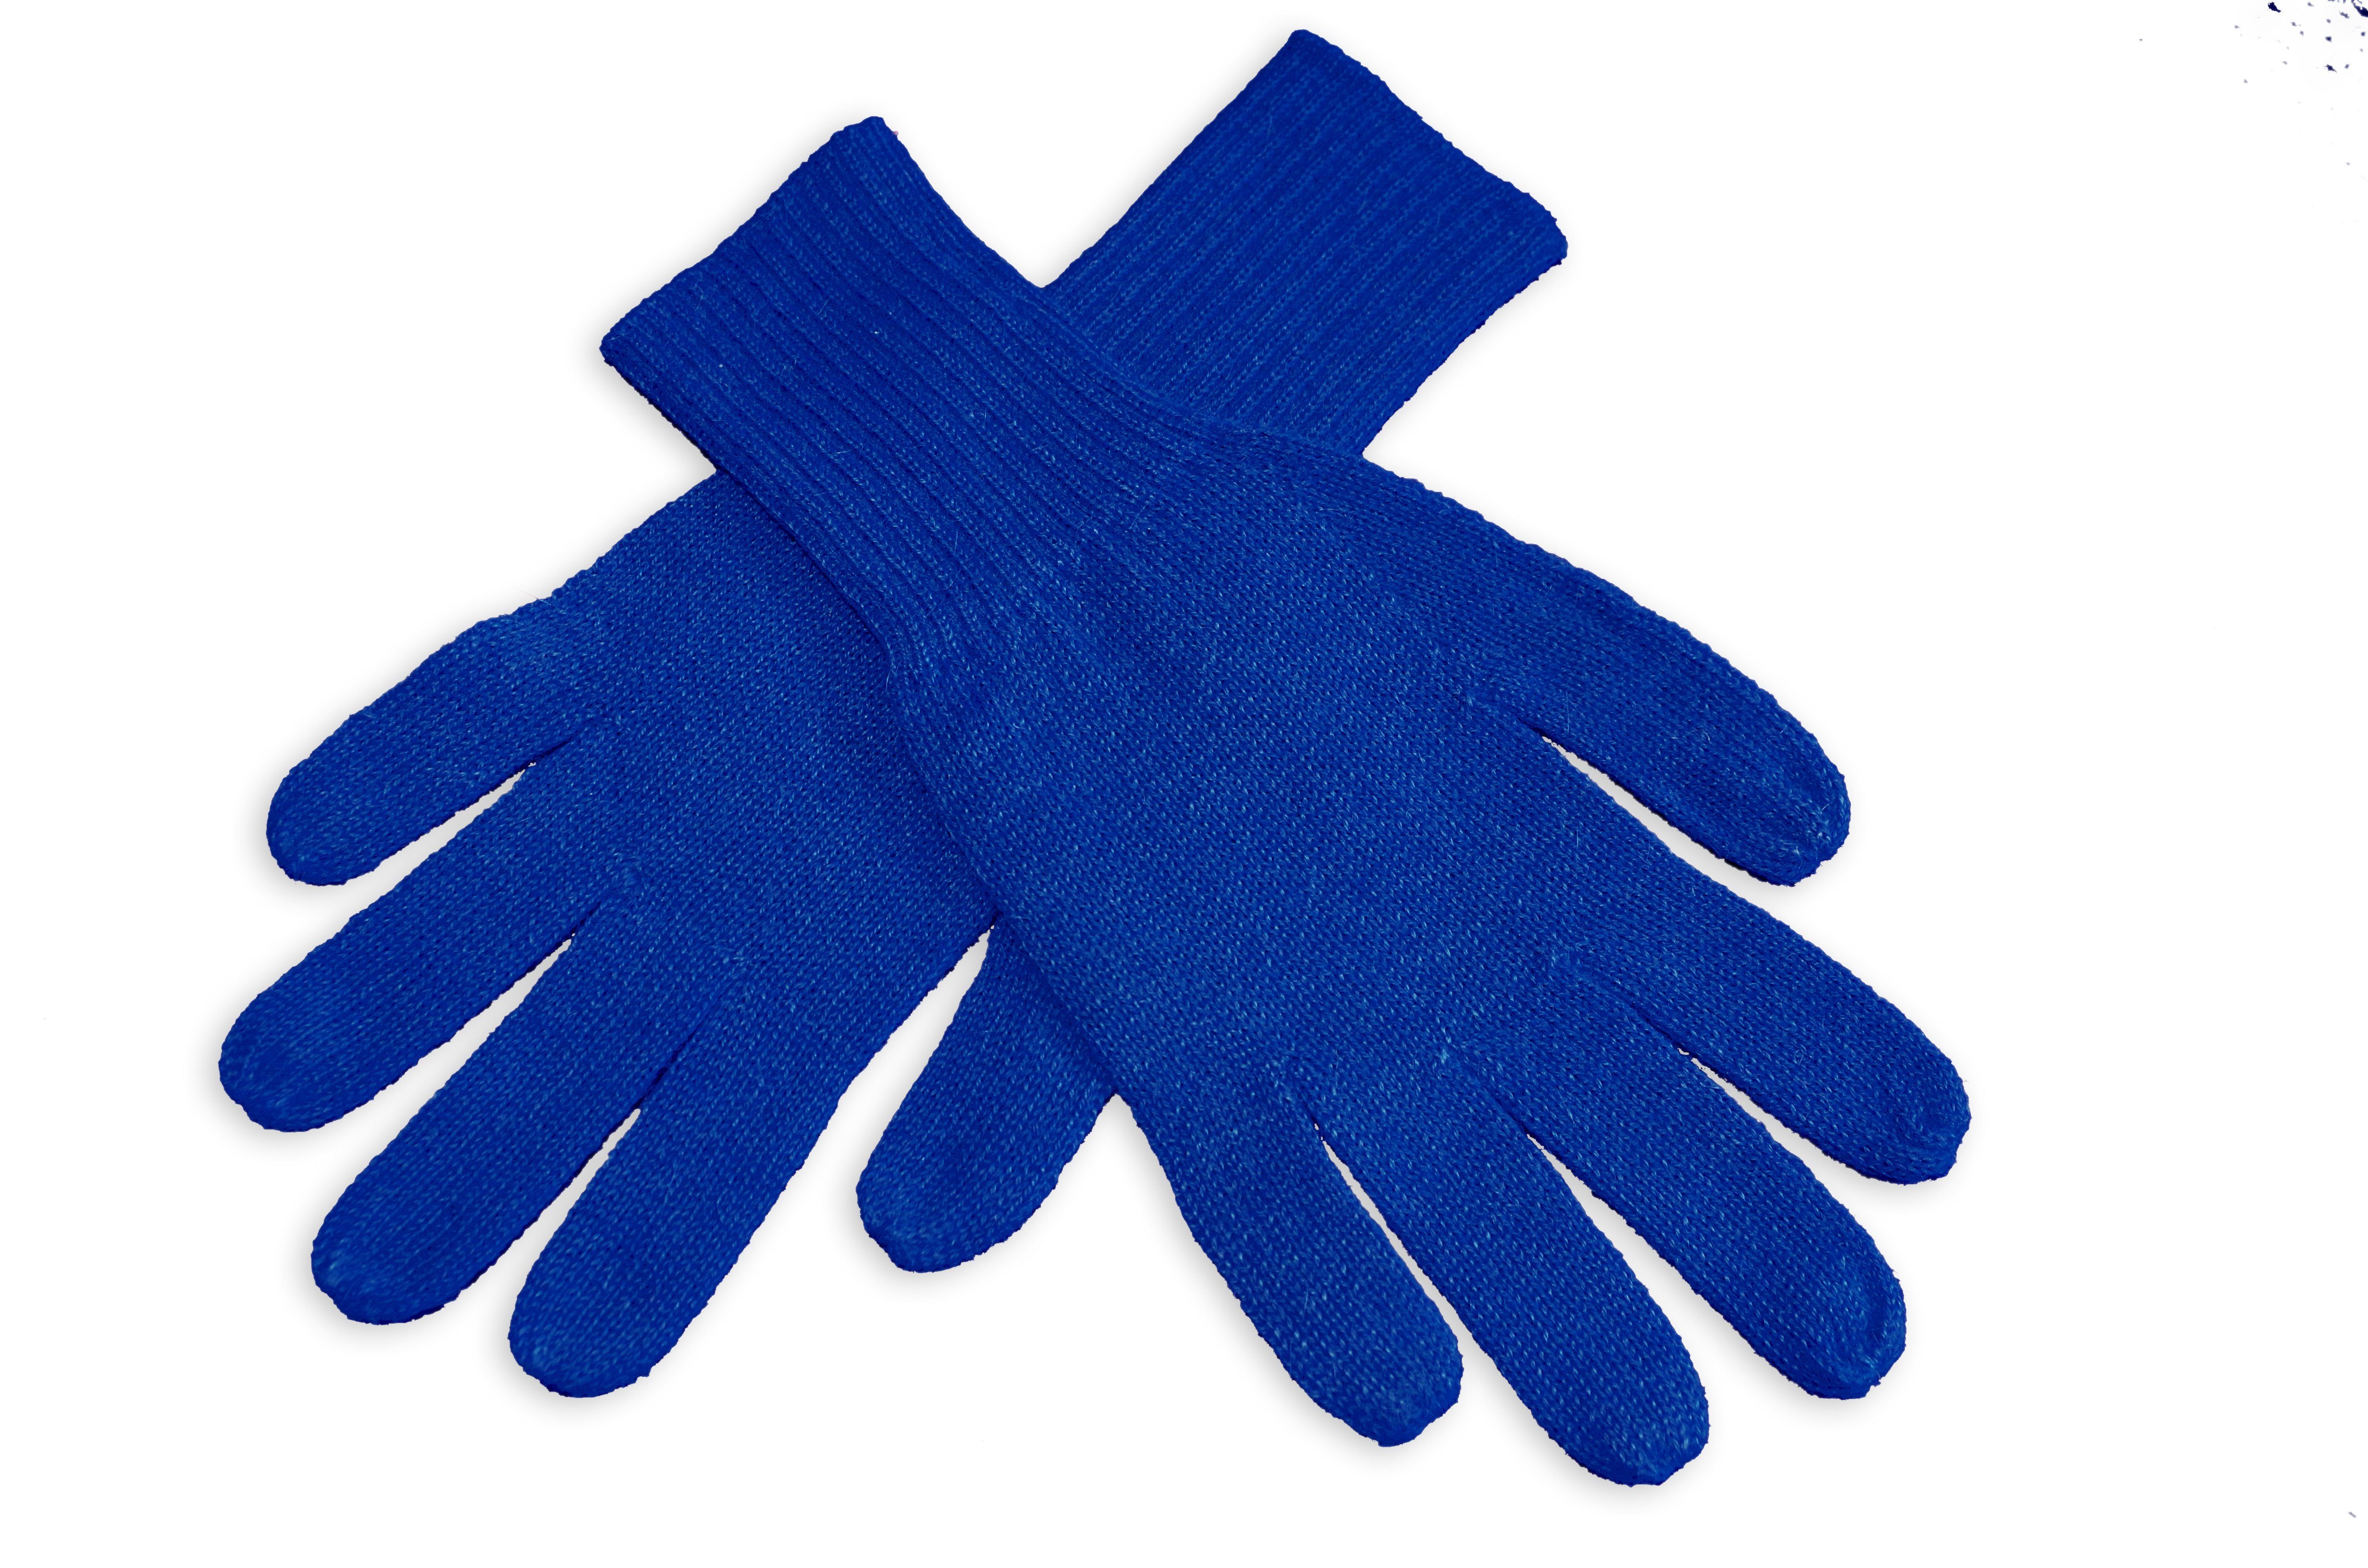 Posh Gear Strickhandschuhe Guantino Alpaka Fingerhandschuhe aus 100% Alpakawolle dunkel blau